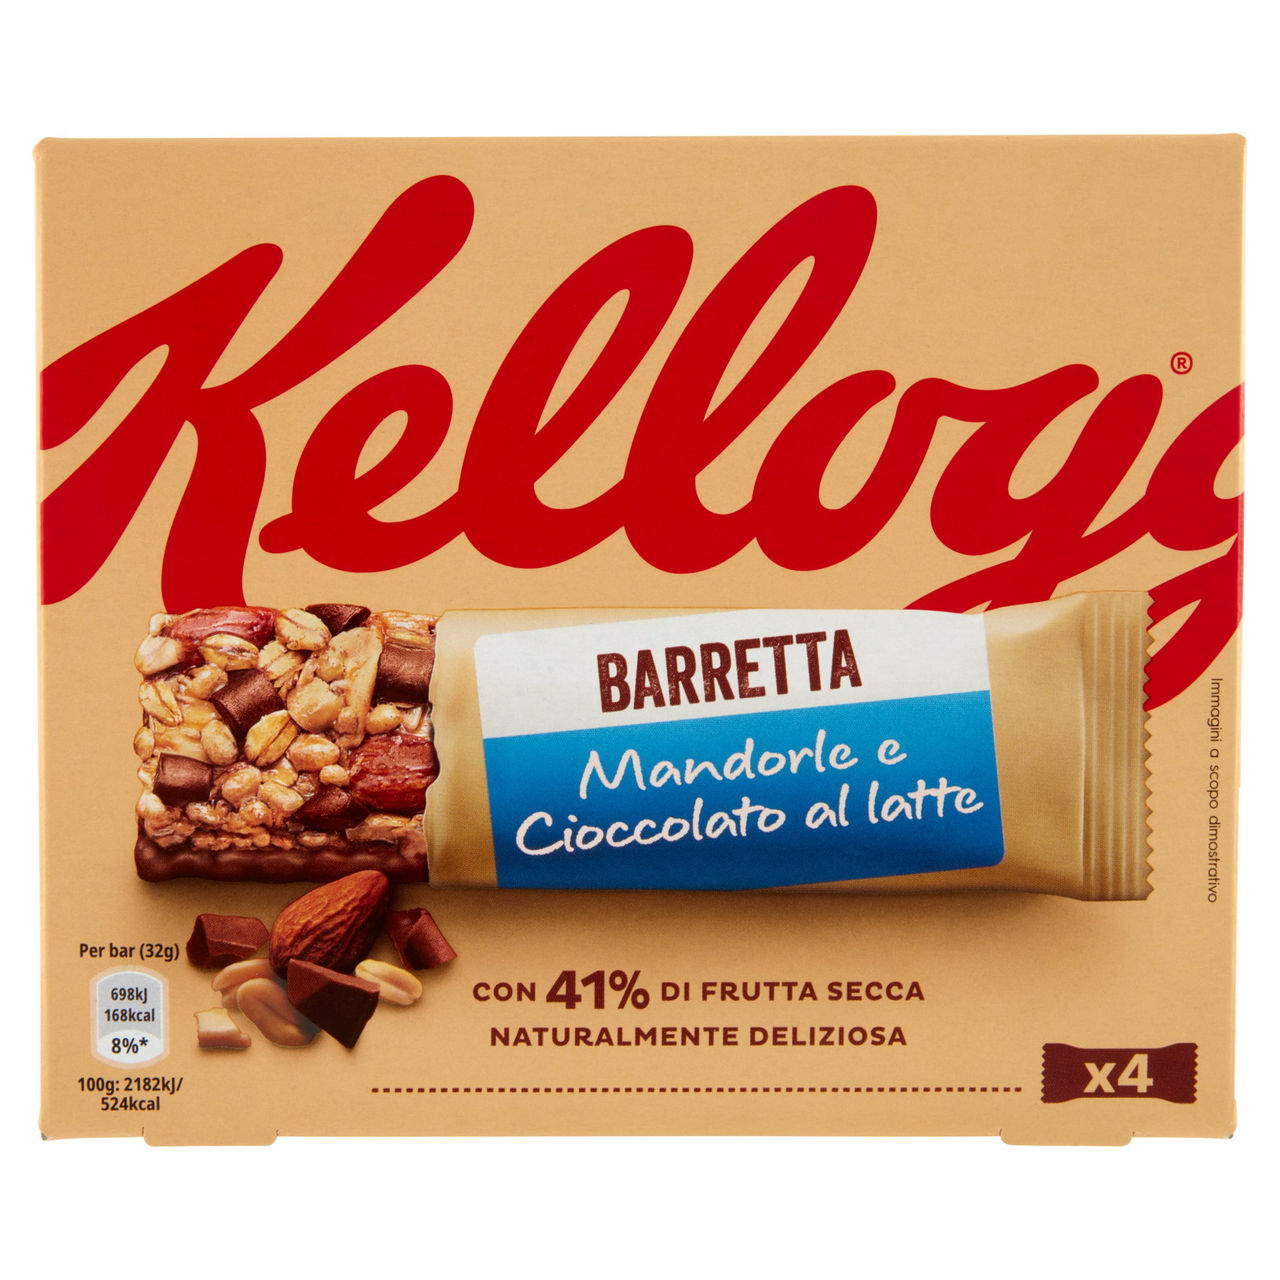 Kellogg's Barretta Mandorle in vendita online